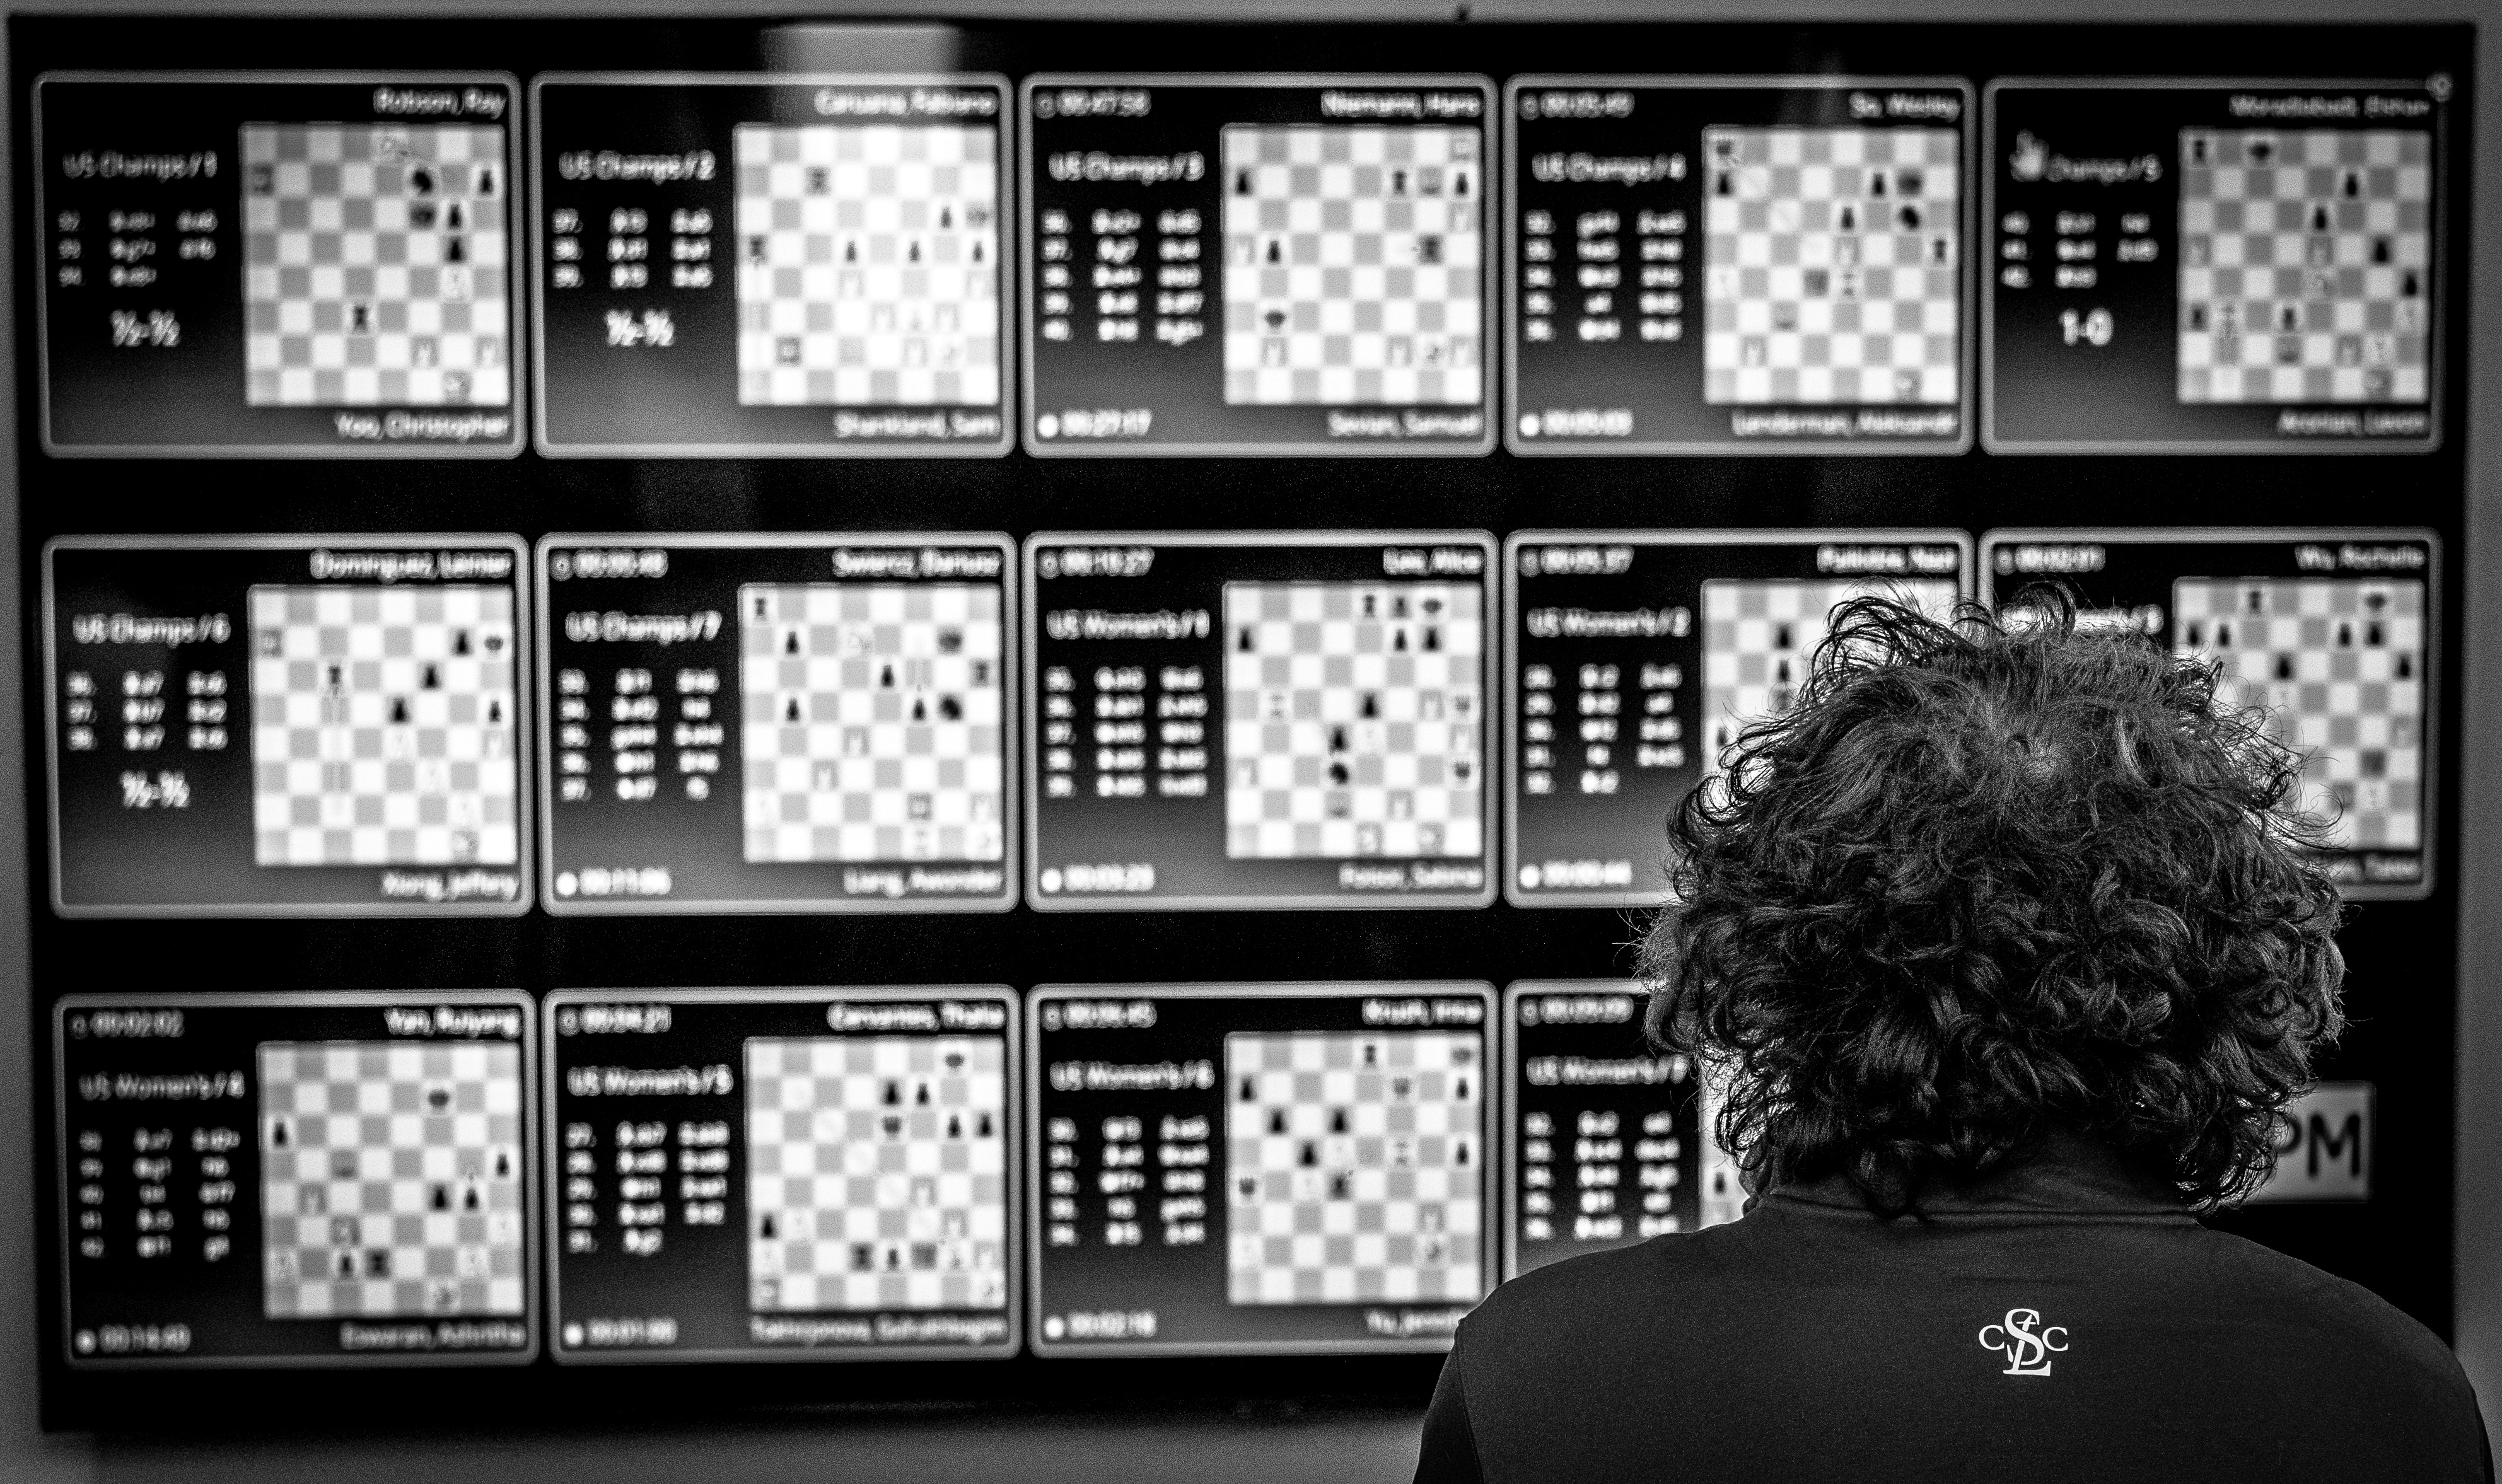 chess24.com on X: Despite losing in Round 1, @viditchess won 7 of